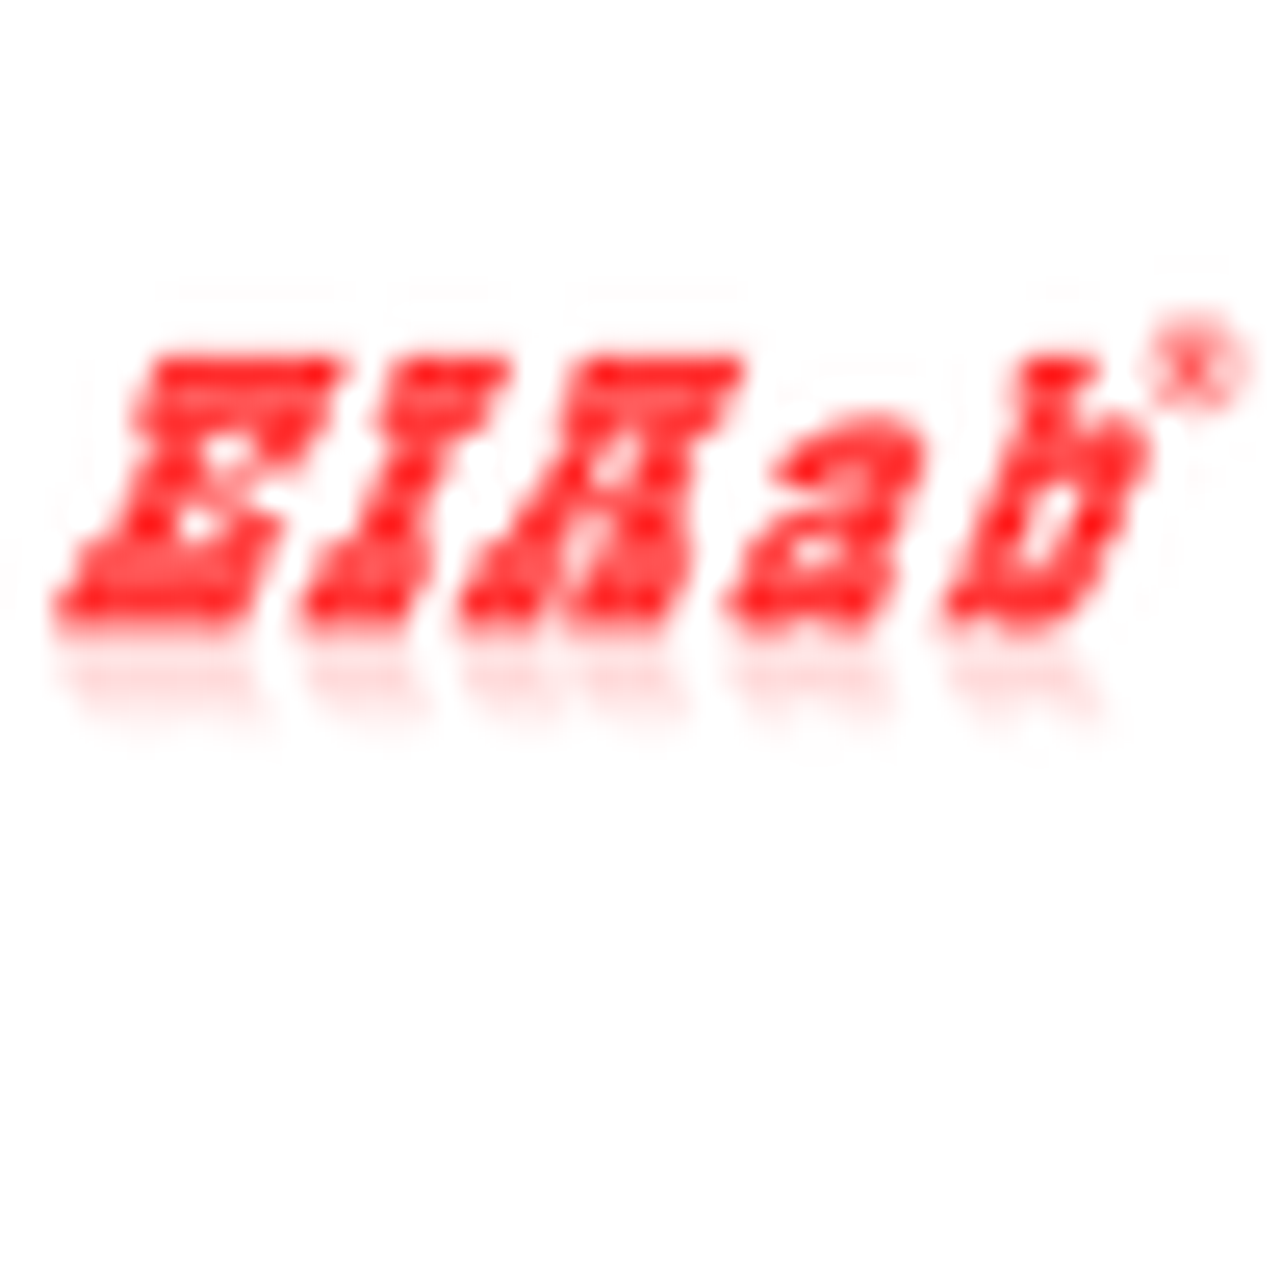 Rat Abcb9/ATP-binding cassette sub-family B member 9 ELISA Kit